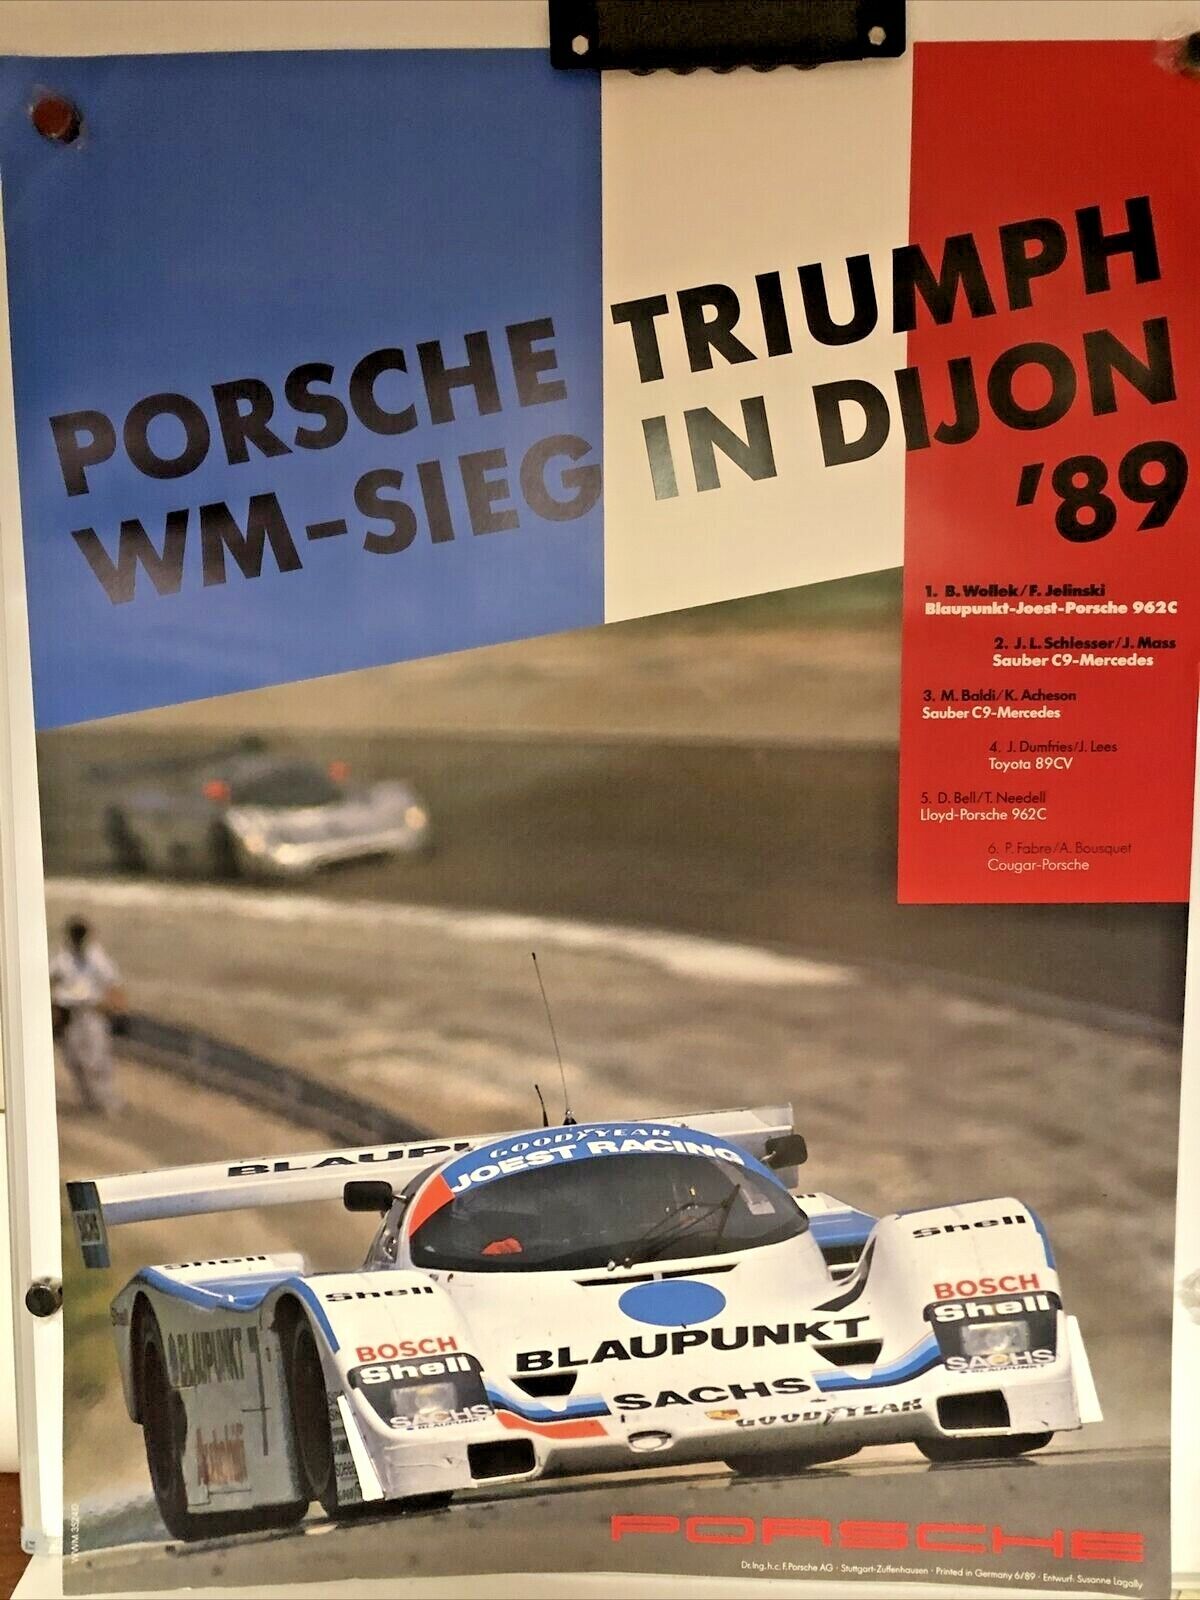 AWESOME Original Factory AG Porsche Poster Triumph WM- Sieg  in Dijon 89